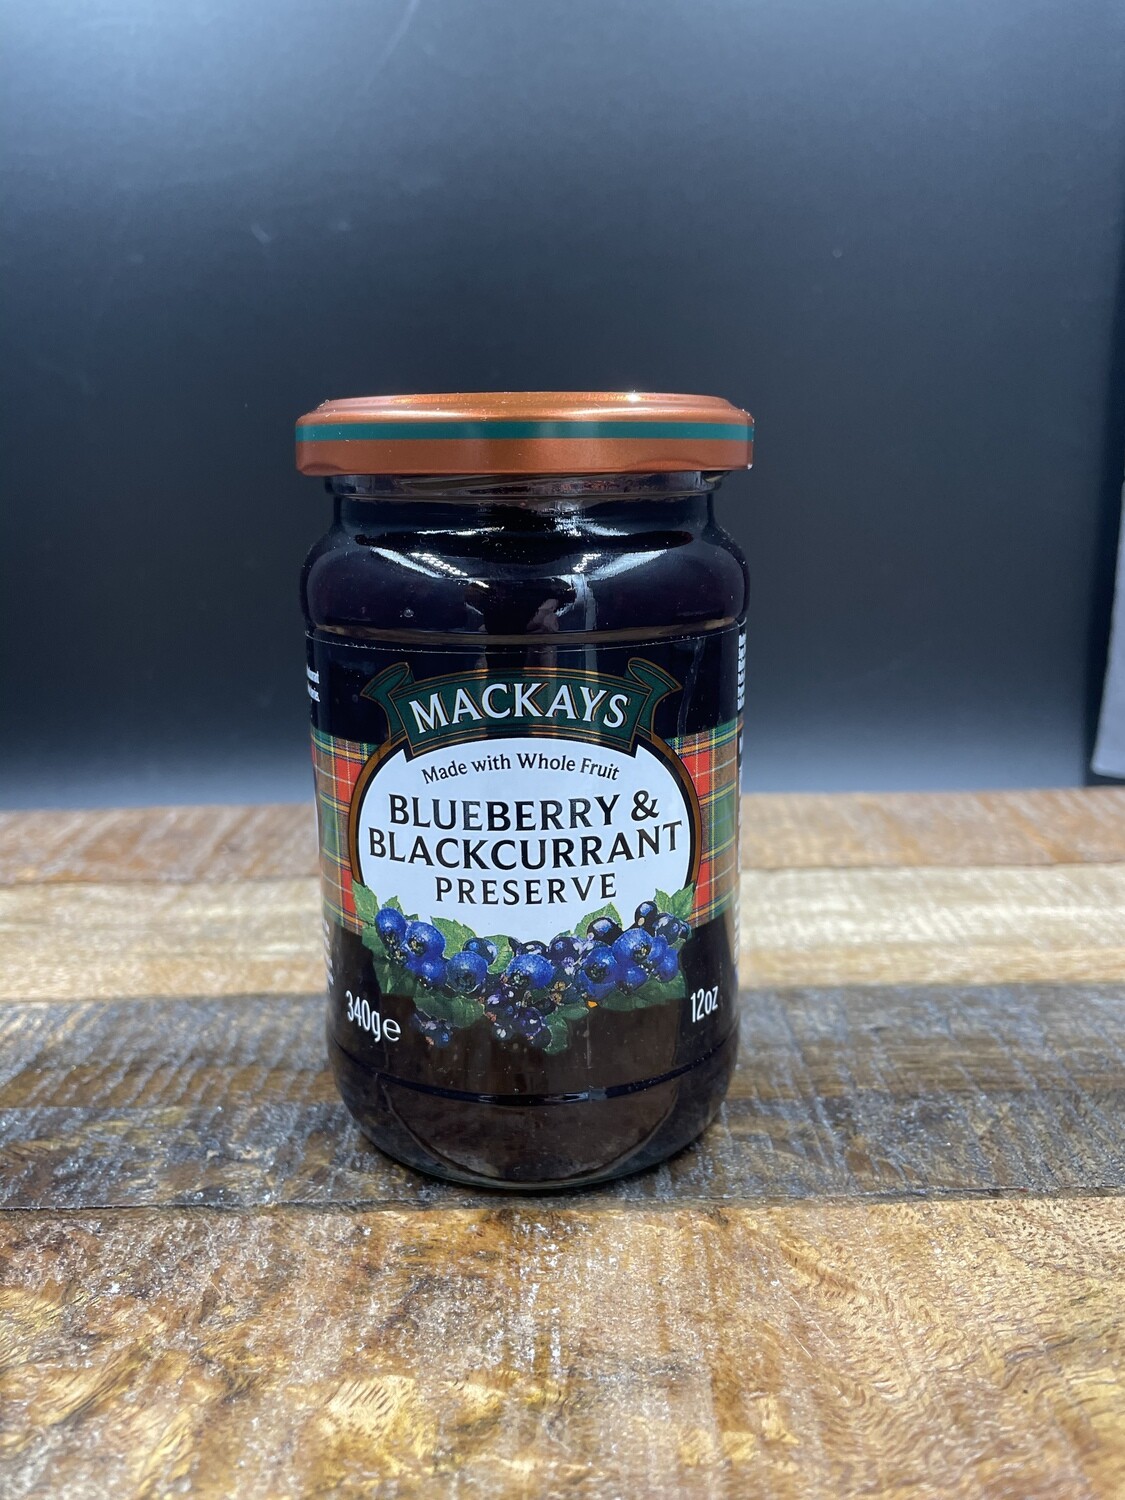 Mackays Blueberry & Blackcurrant Preserve 340g